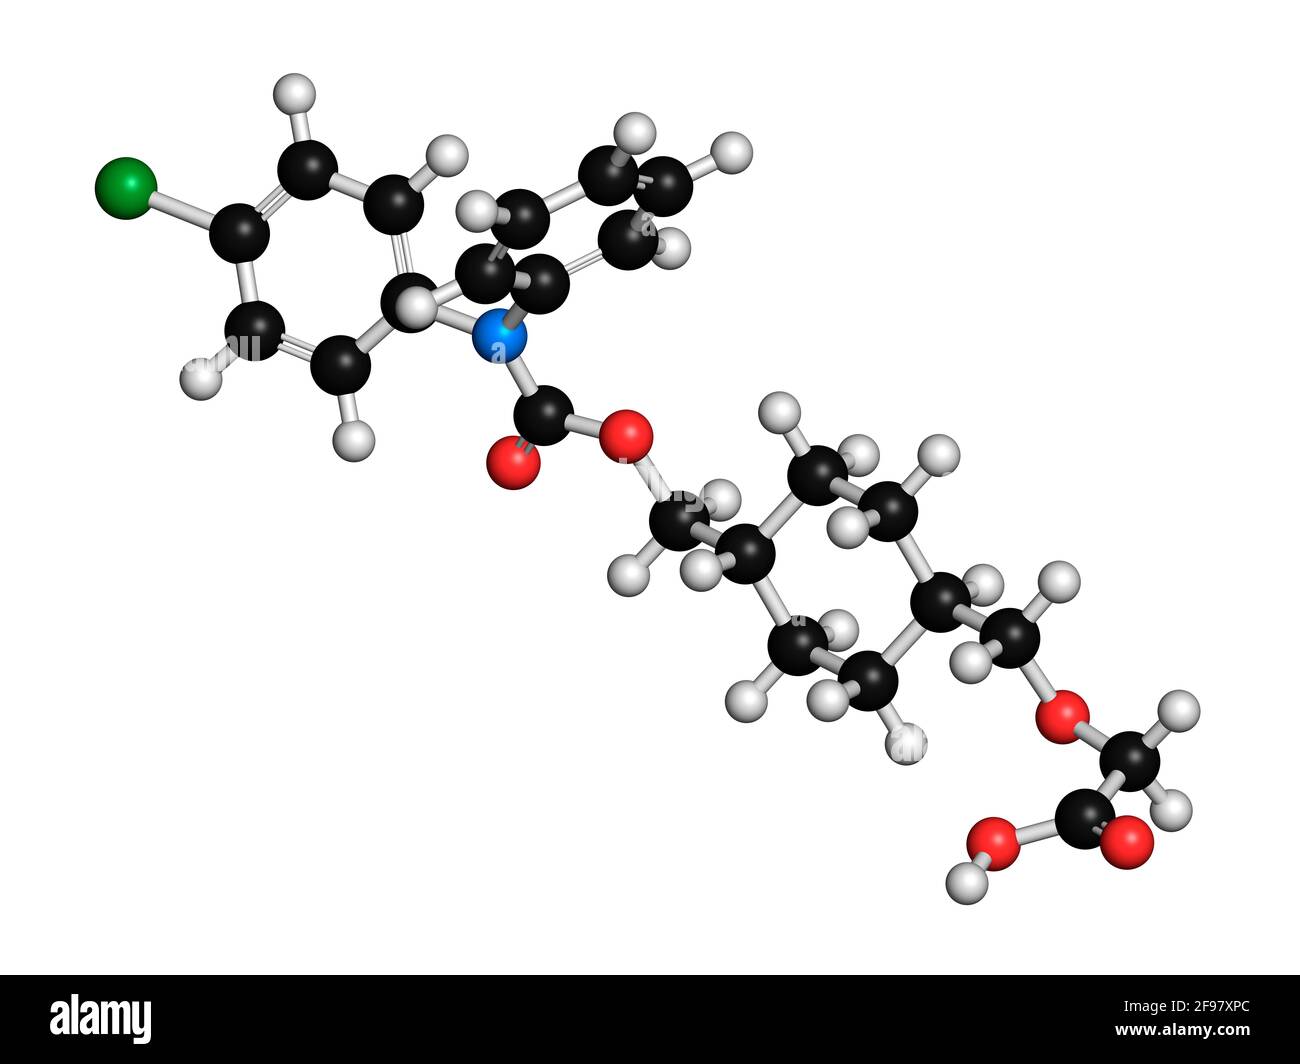 Ralinepag hypertension drug molecule, illustration Stock Photo